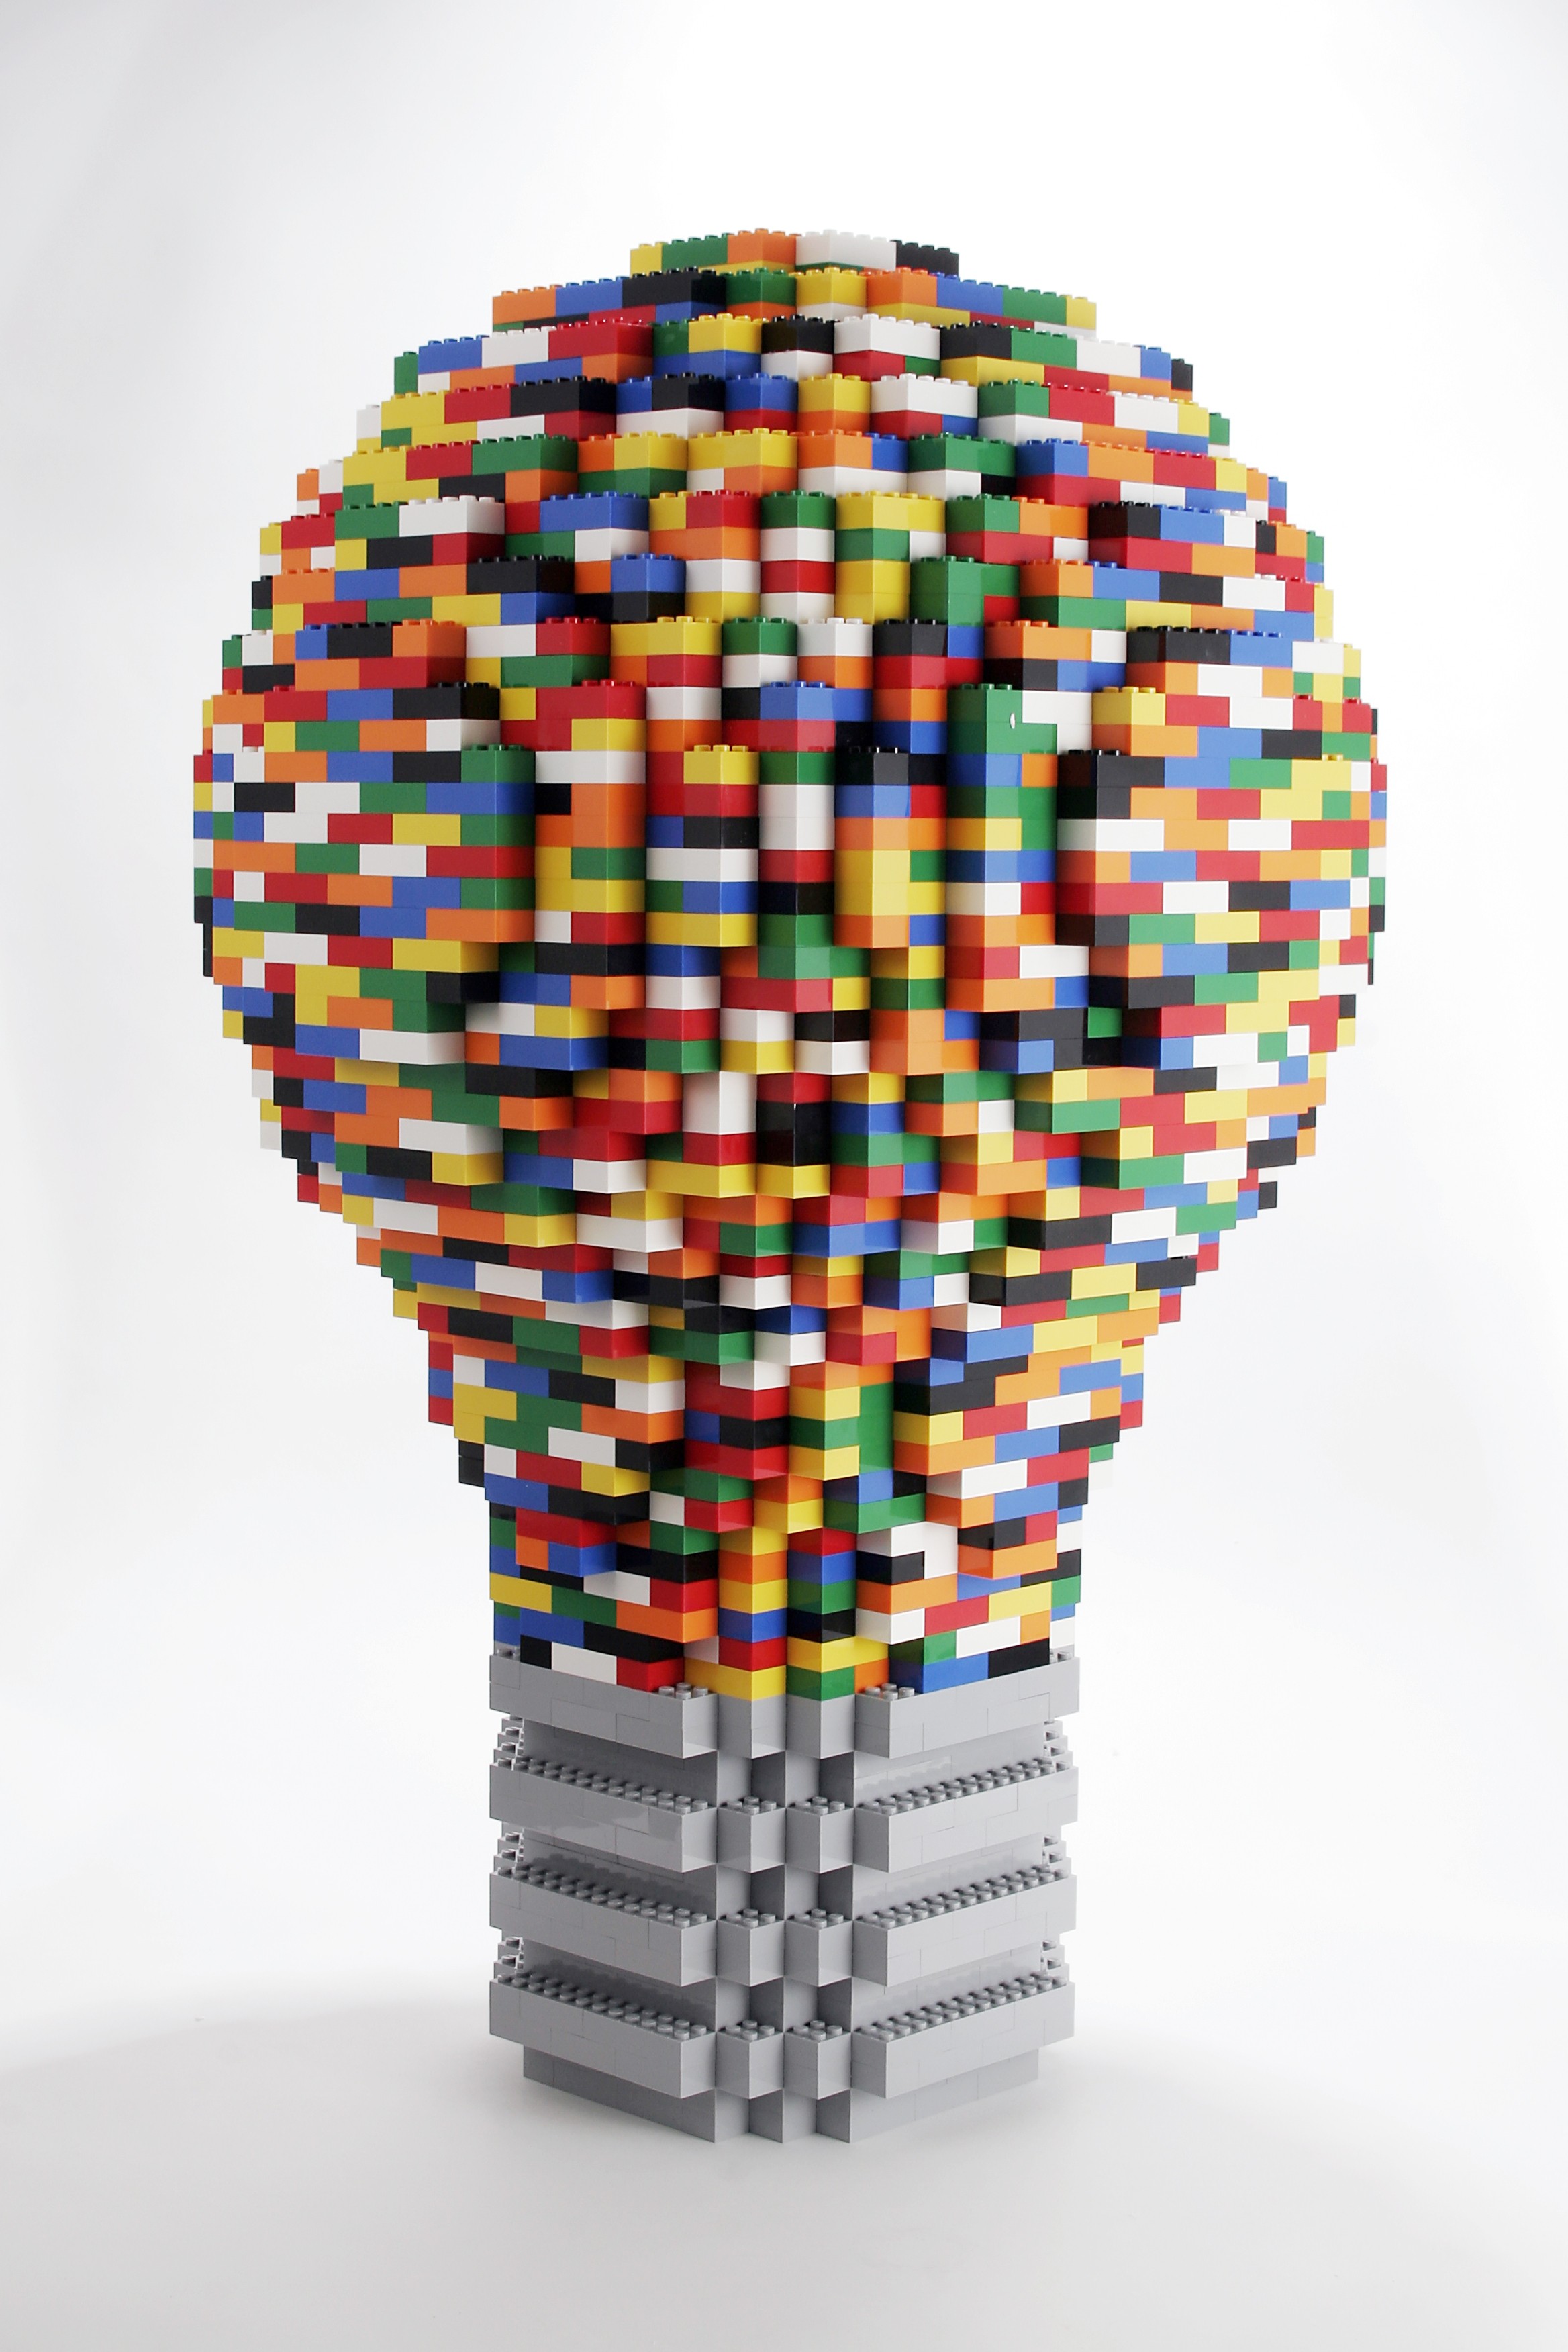 General 2336x3504 LEGO toys bricks portrait display colorful light bulb white background 3D Blocks simple background